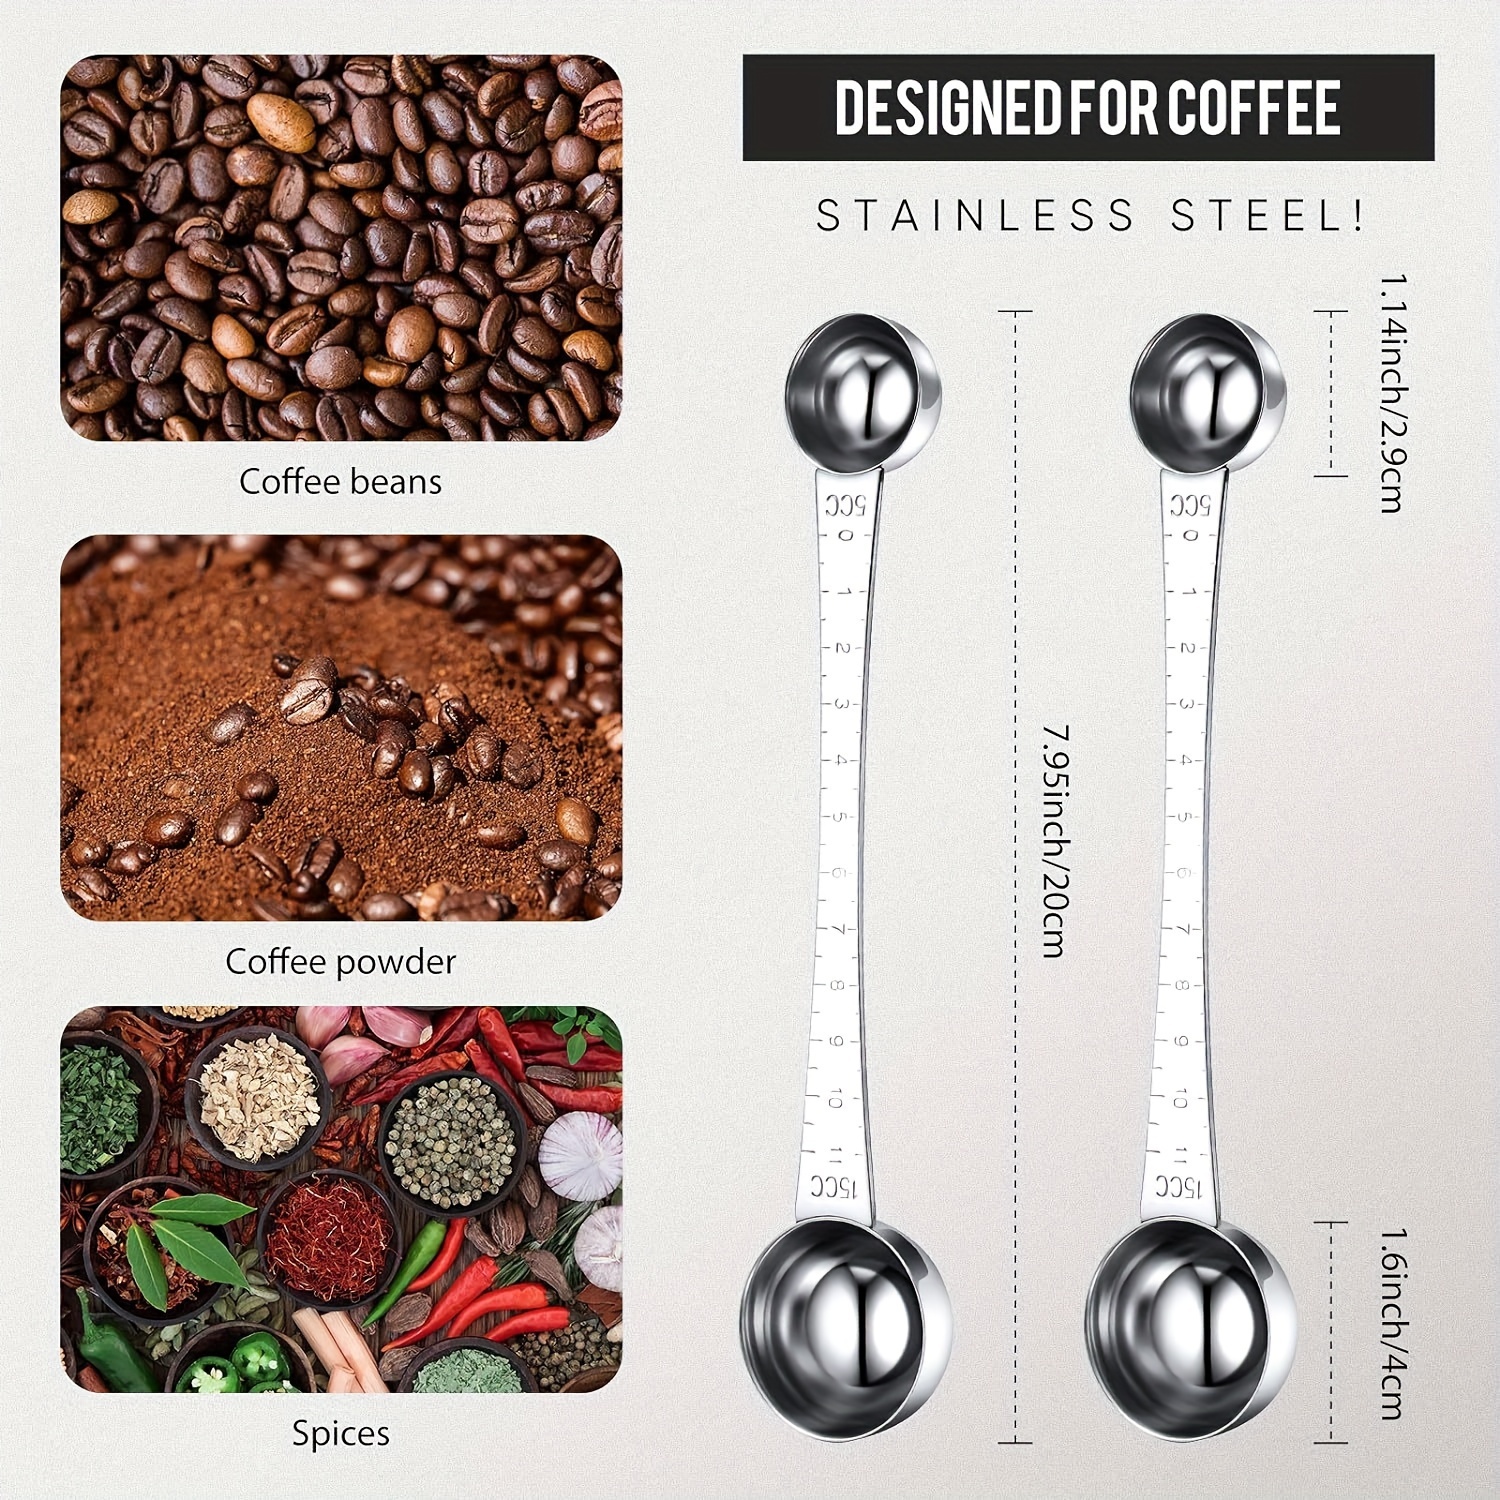 5 Cc 1 Teaspoon 5 Ml Long Handle Scoop for Measuring Coffee